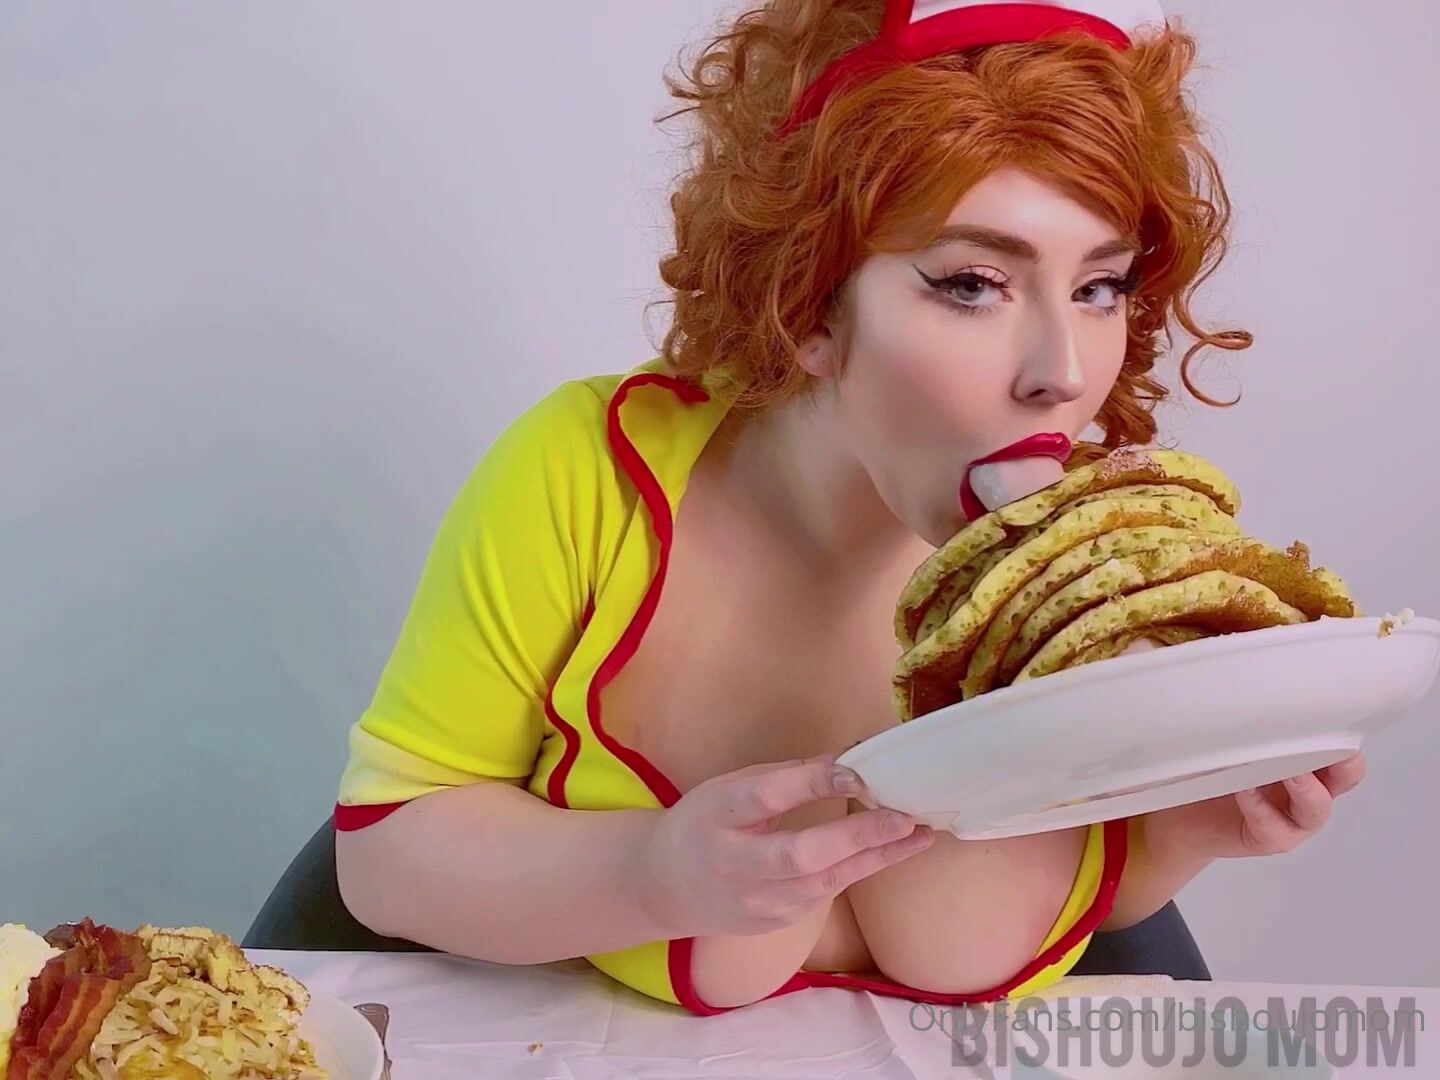 BishoujoMom  - Pancakes and Tits